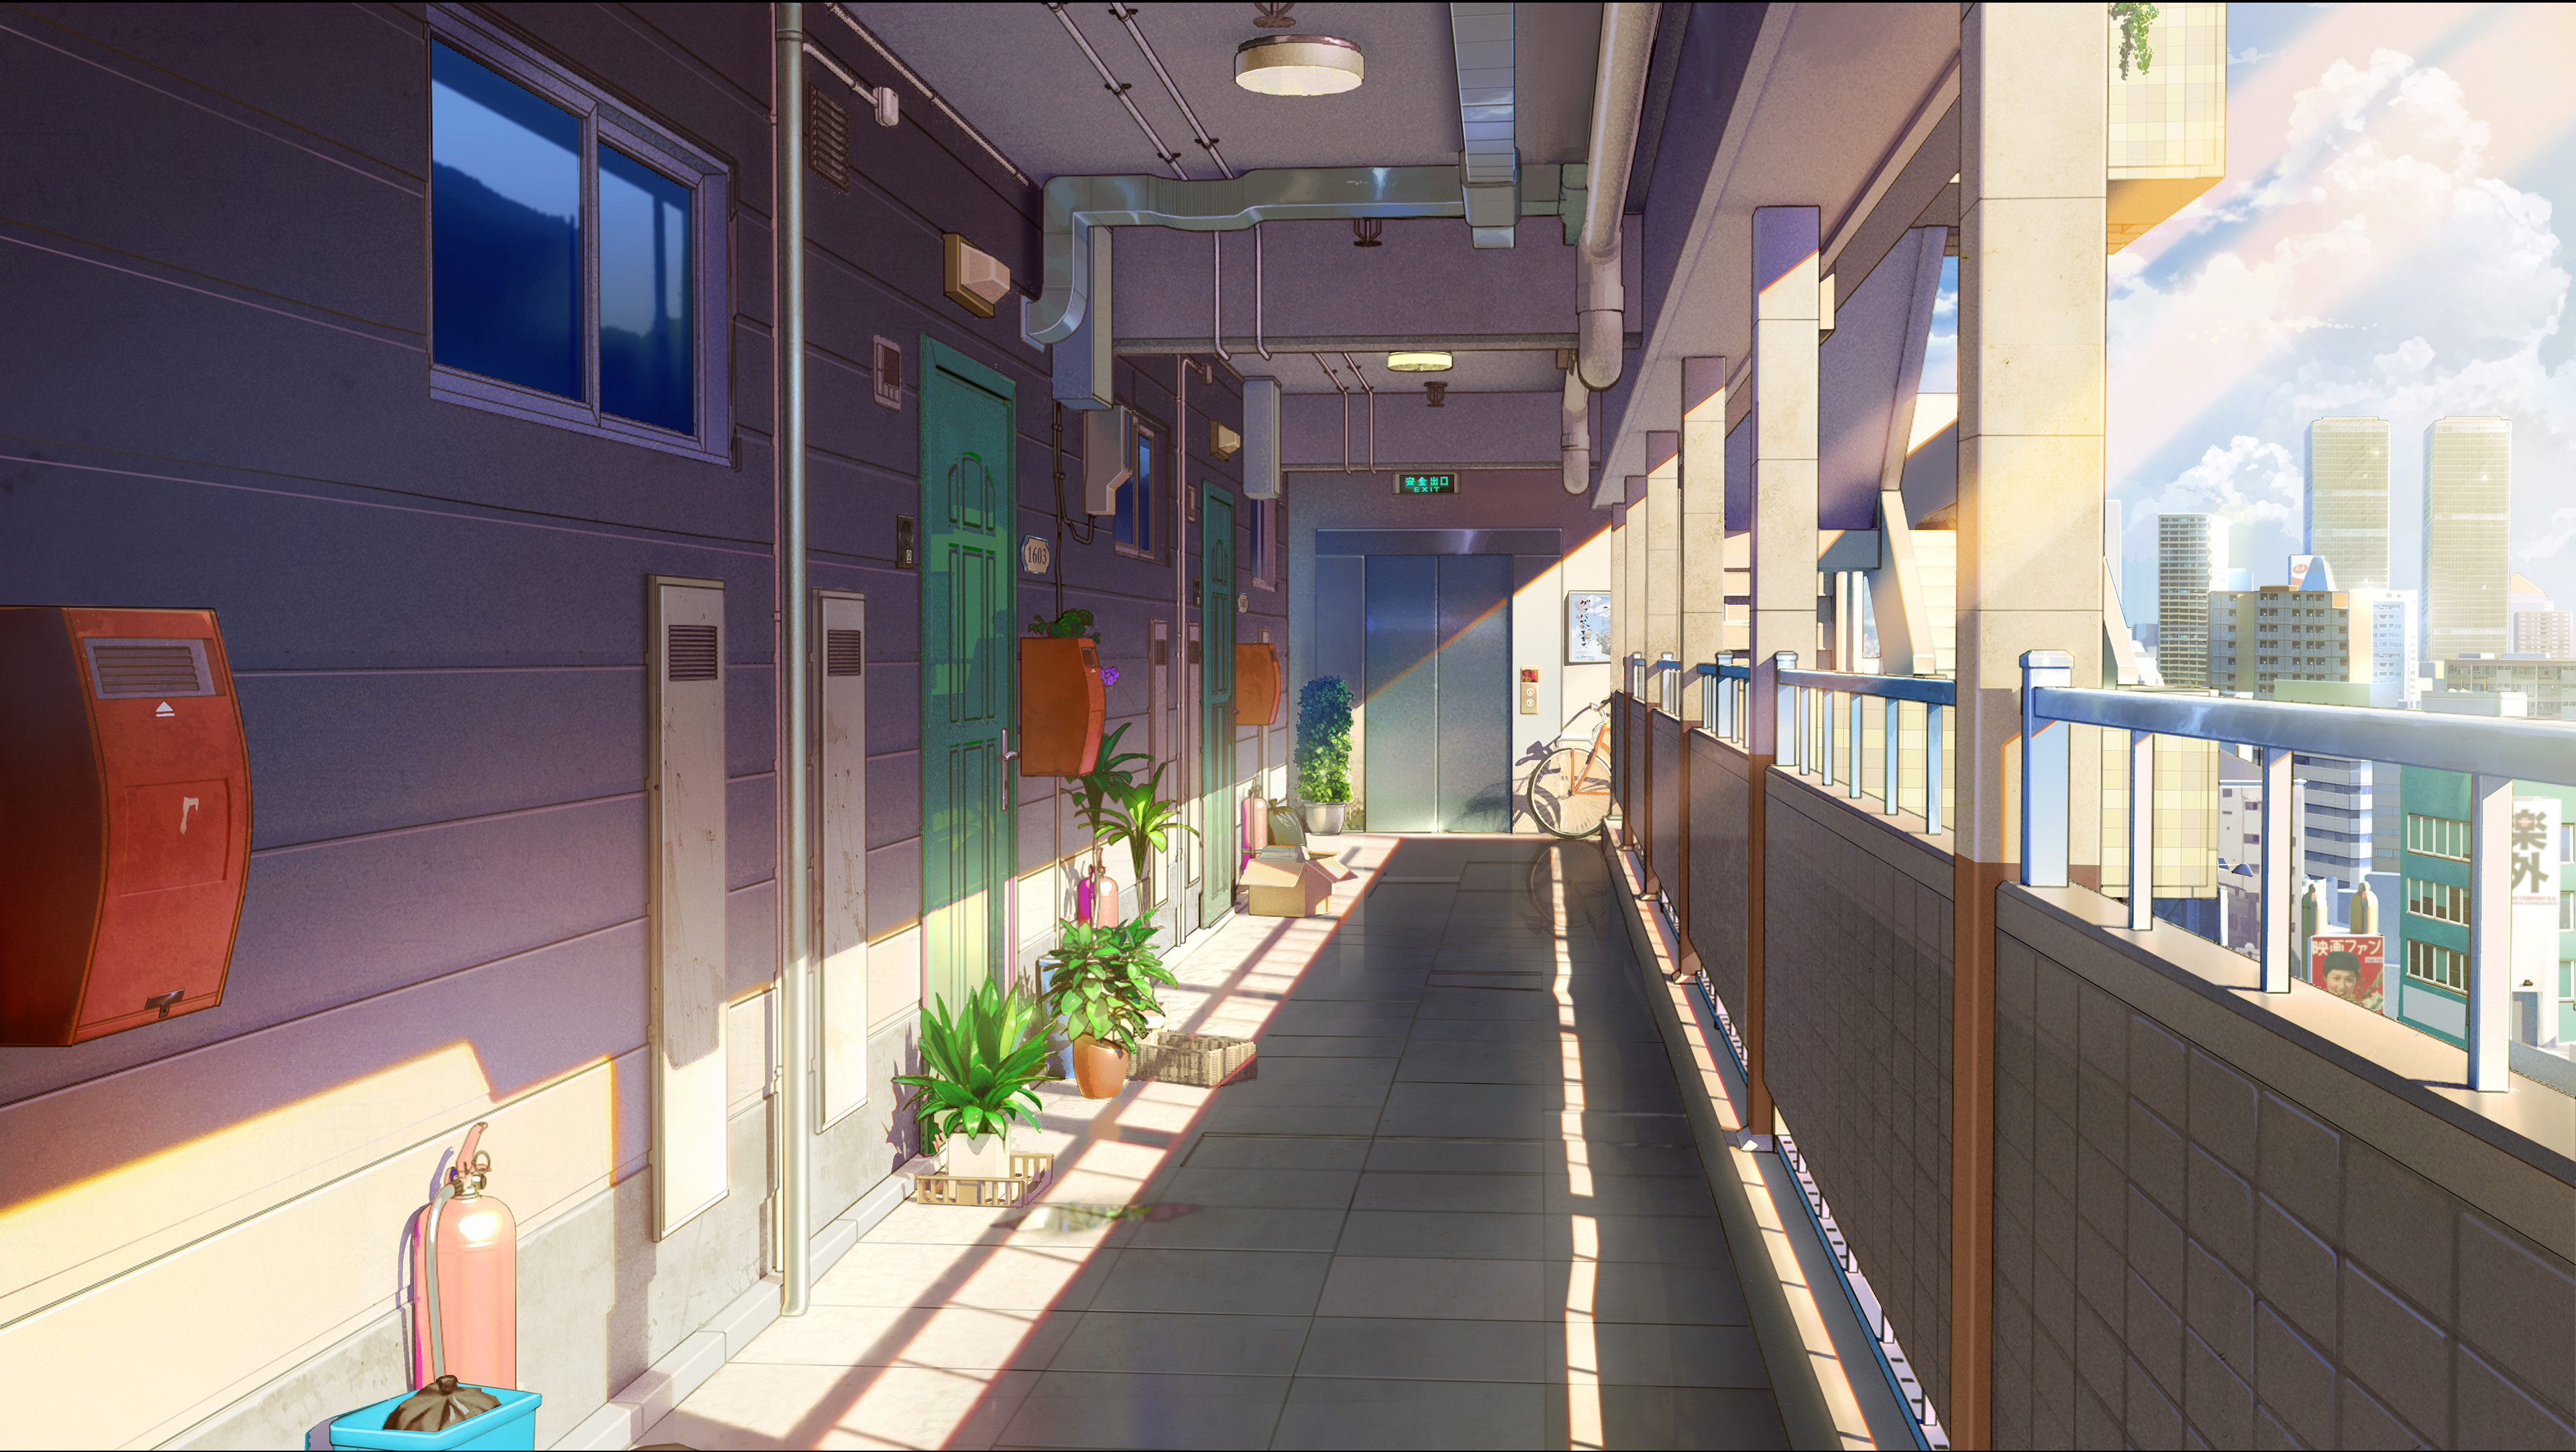 Anime Night 4k landscape wallpaper by CYBERxYT on DeviantArt